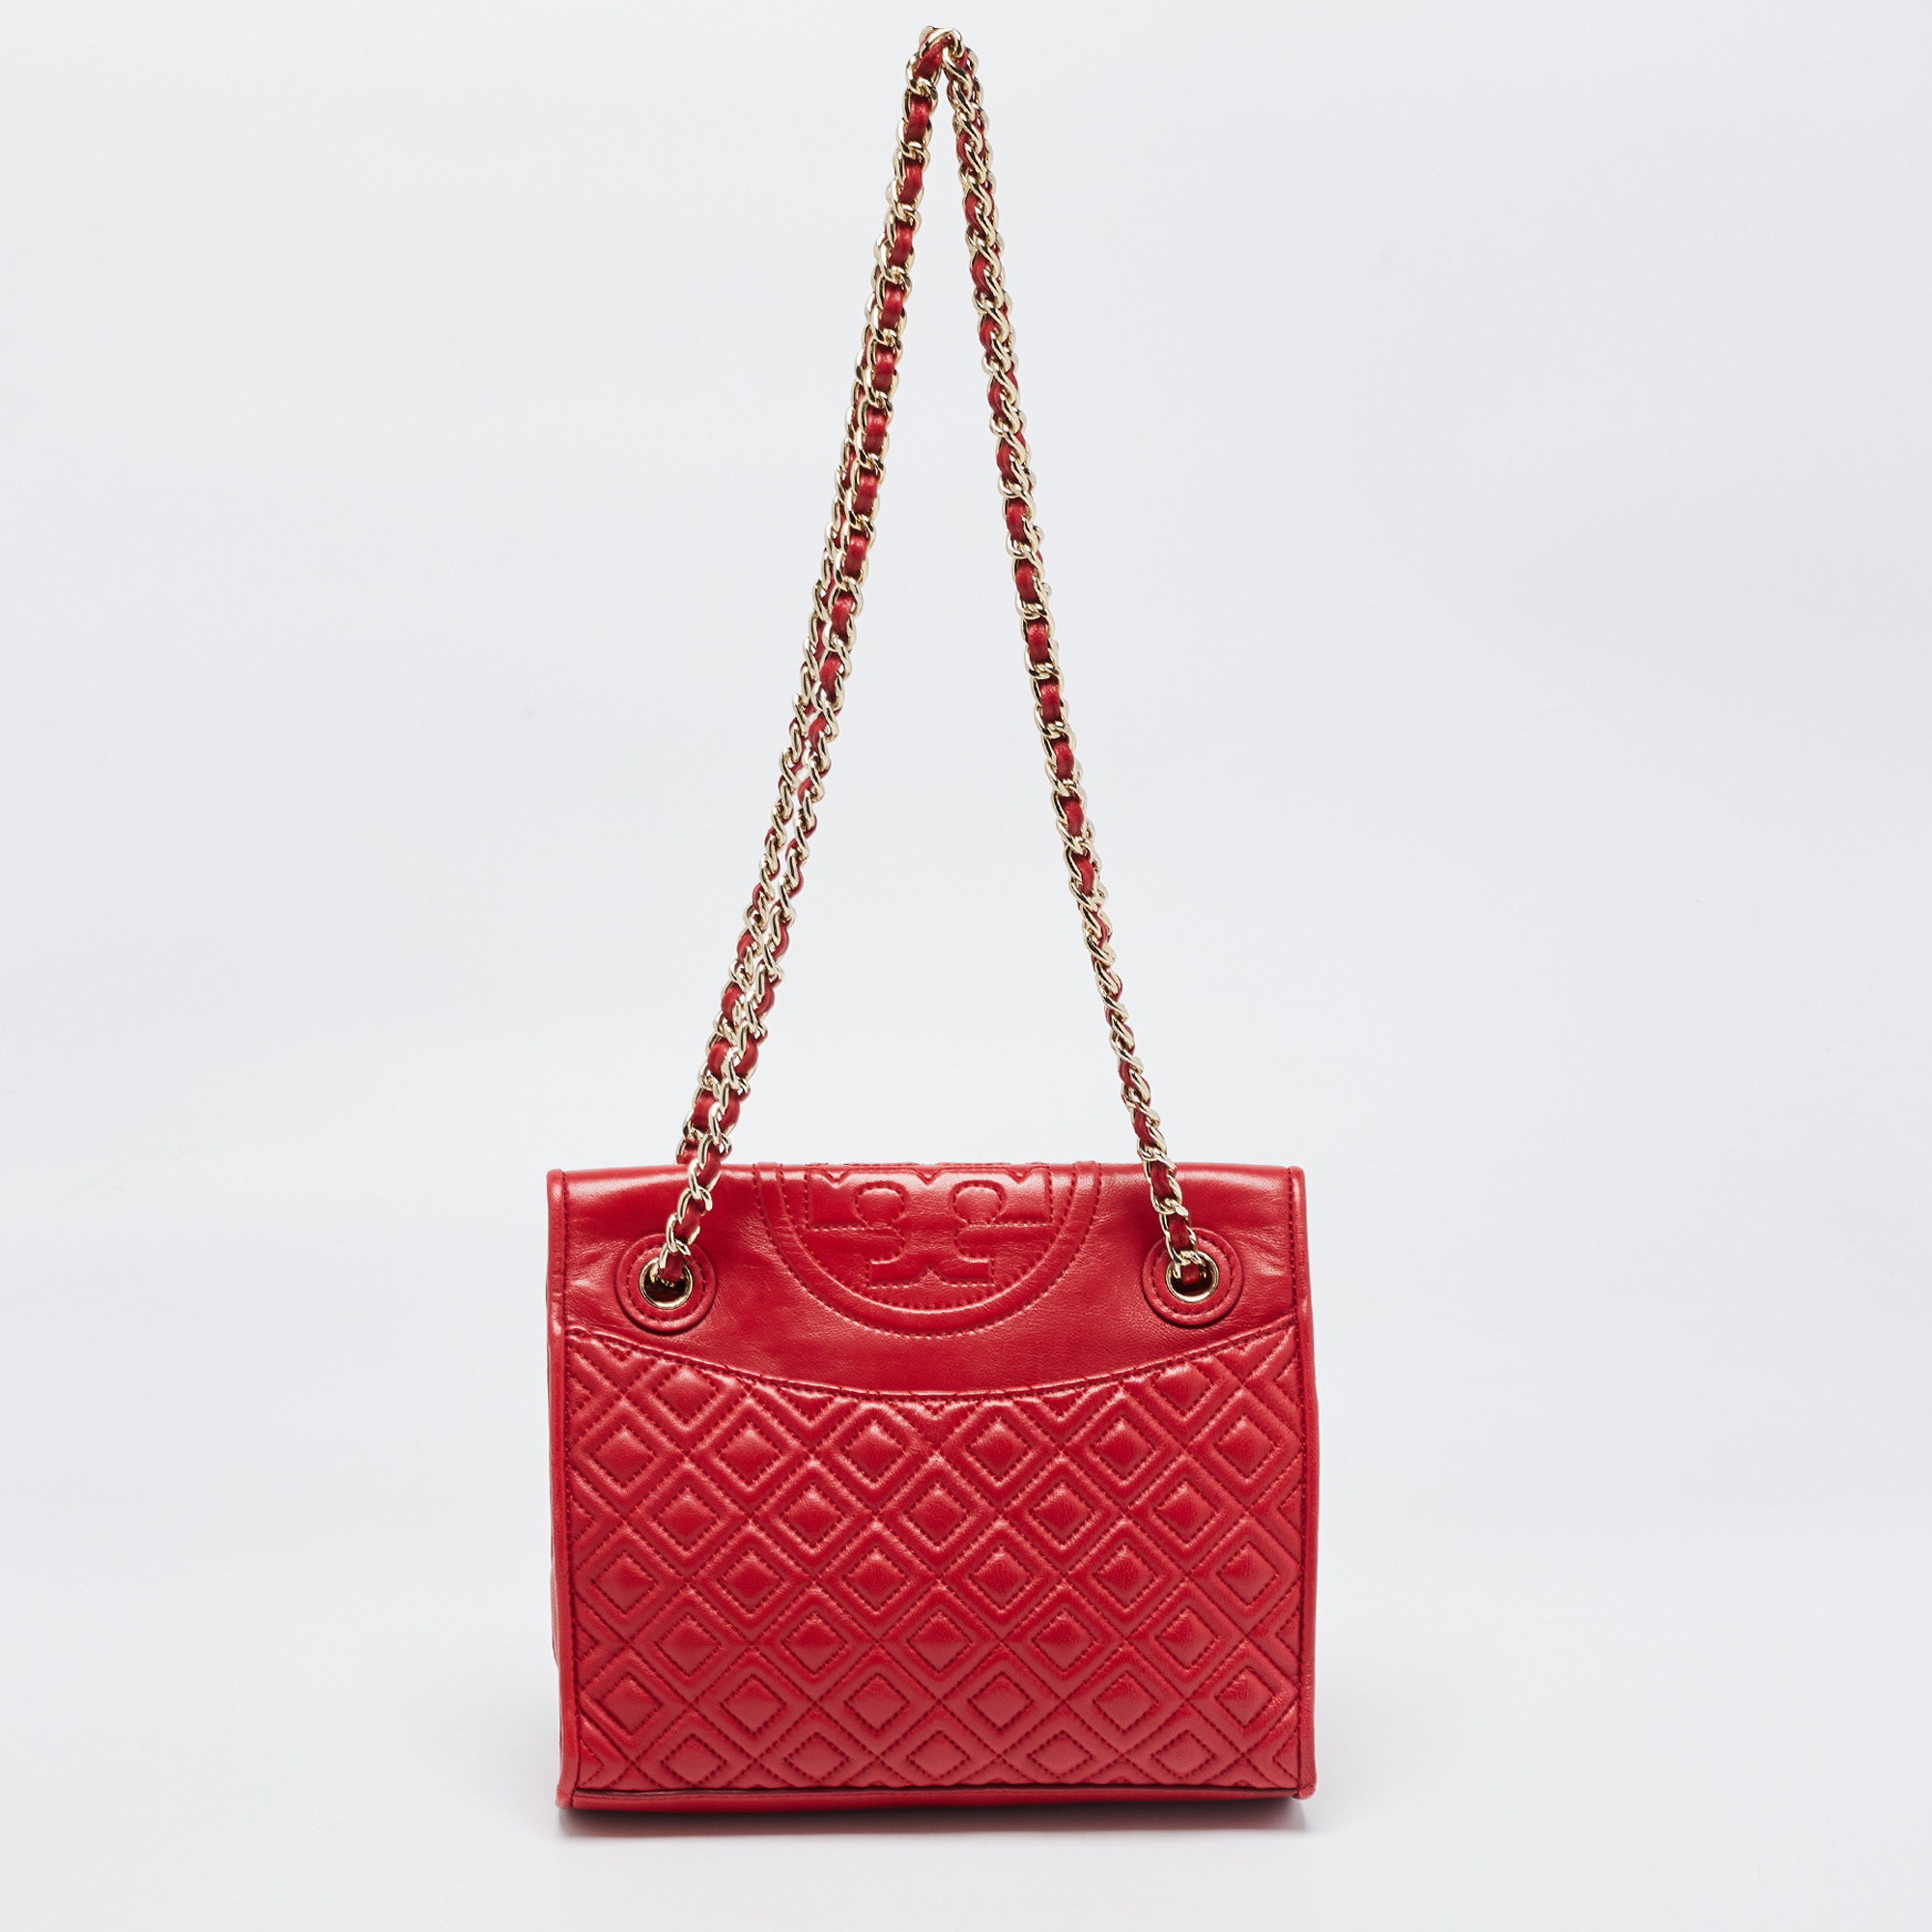 Tory Burch Red Leather Medium Fleming Shoulder Bag